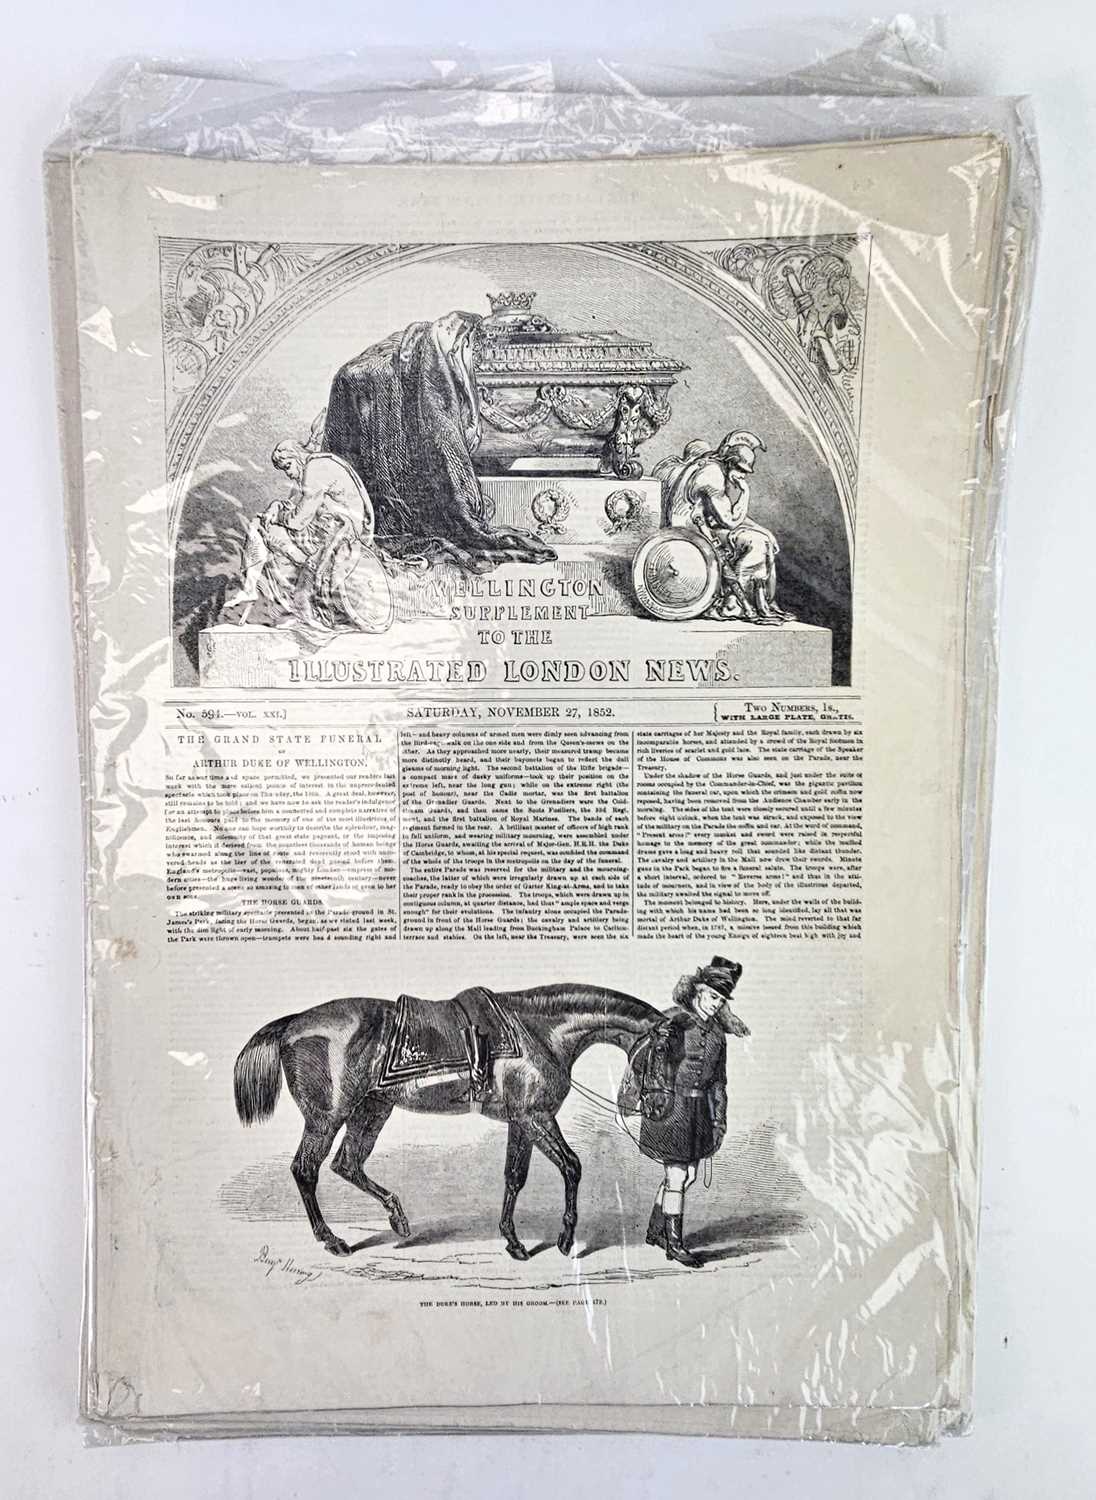 Illustrated London News - Duke of Wellington's Funeral. - Image 3 of 7